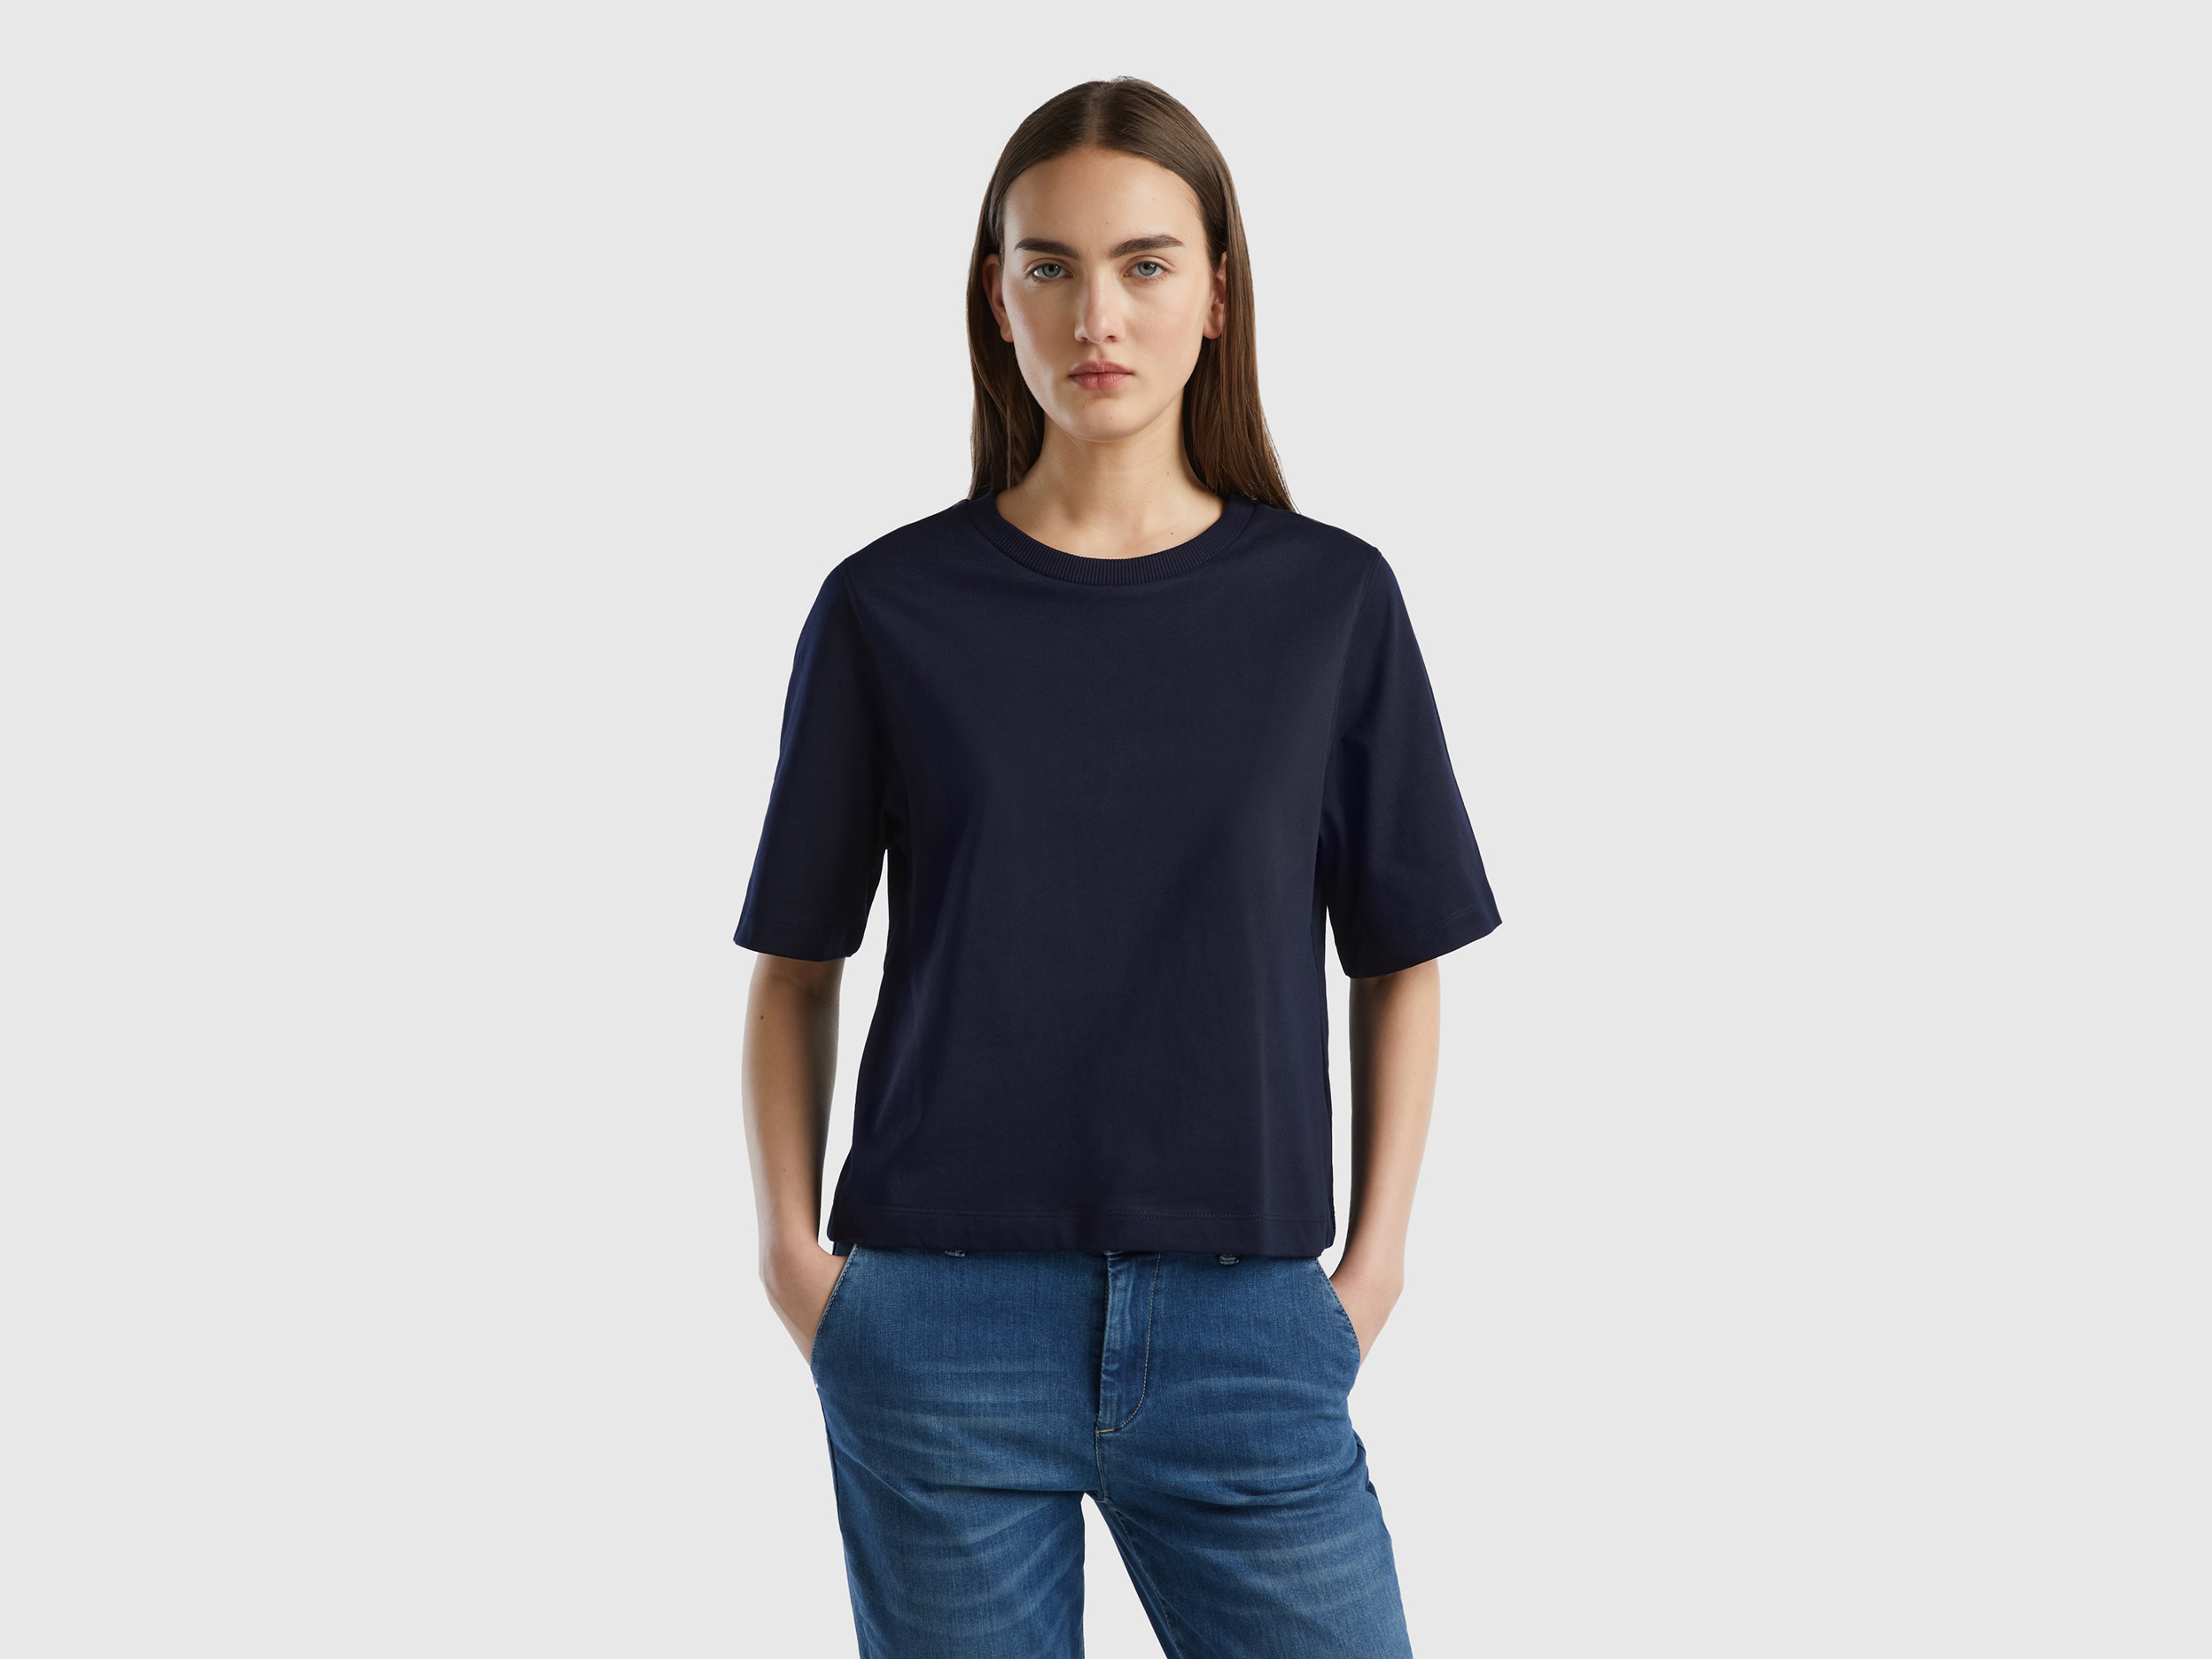 Benetton, 100% Cotton Boxy Fit T-shirt, size M, Dark Blue, Women